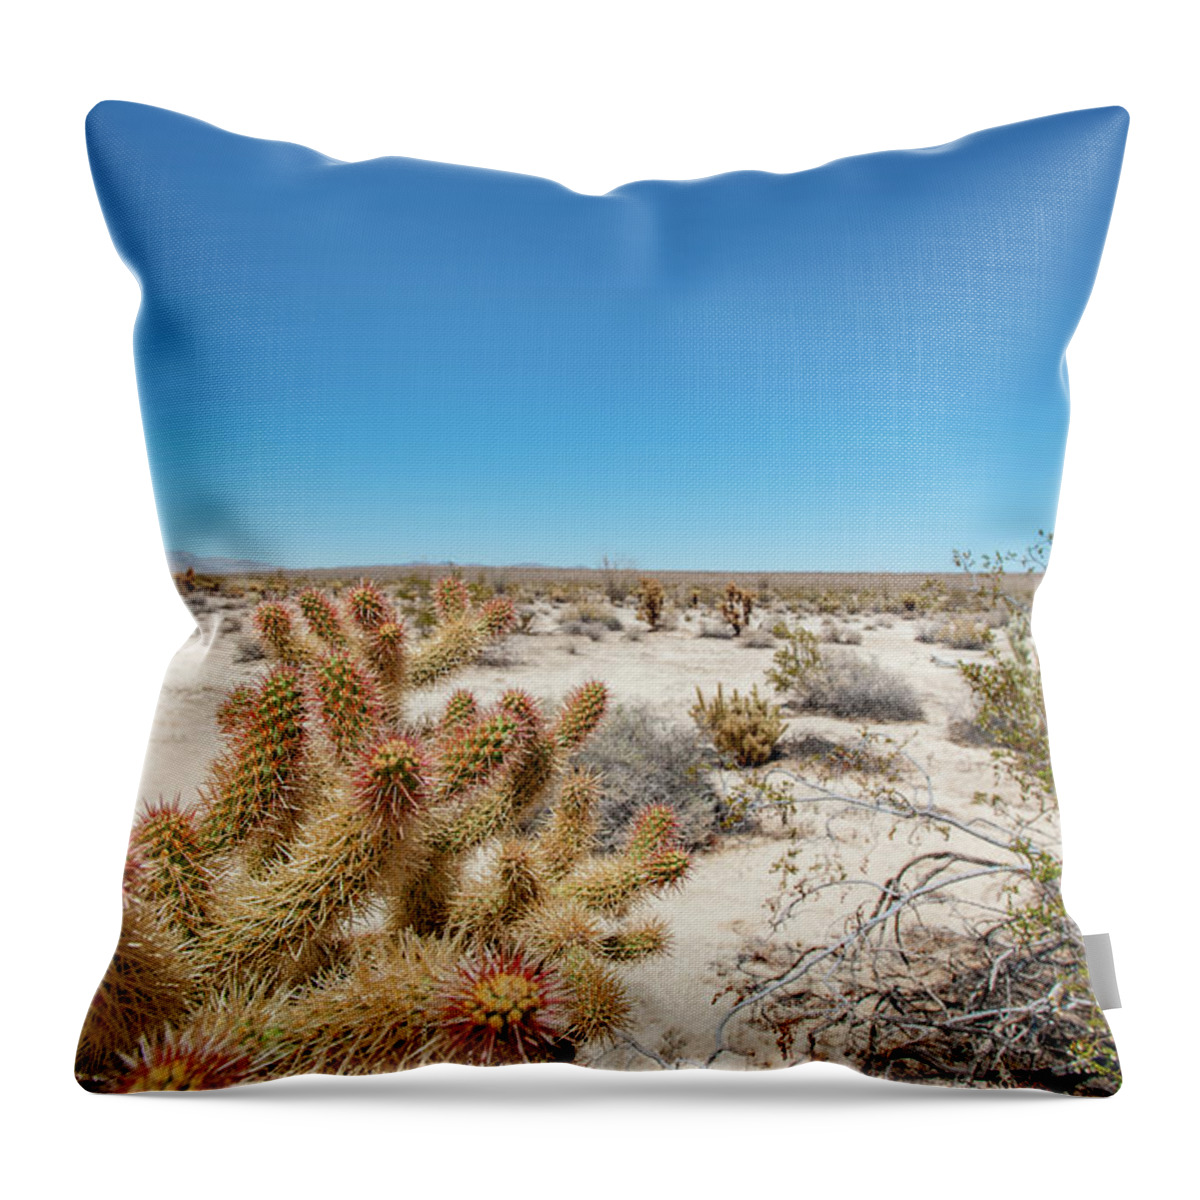 Anza-borrego Desert State Park Throw Pillow featuring the photograph Teddy Bear Cactus by Mark Duehmig